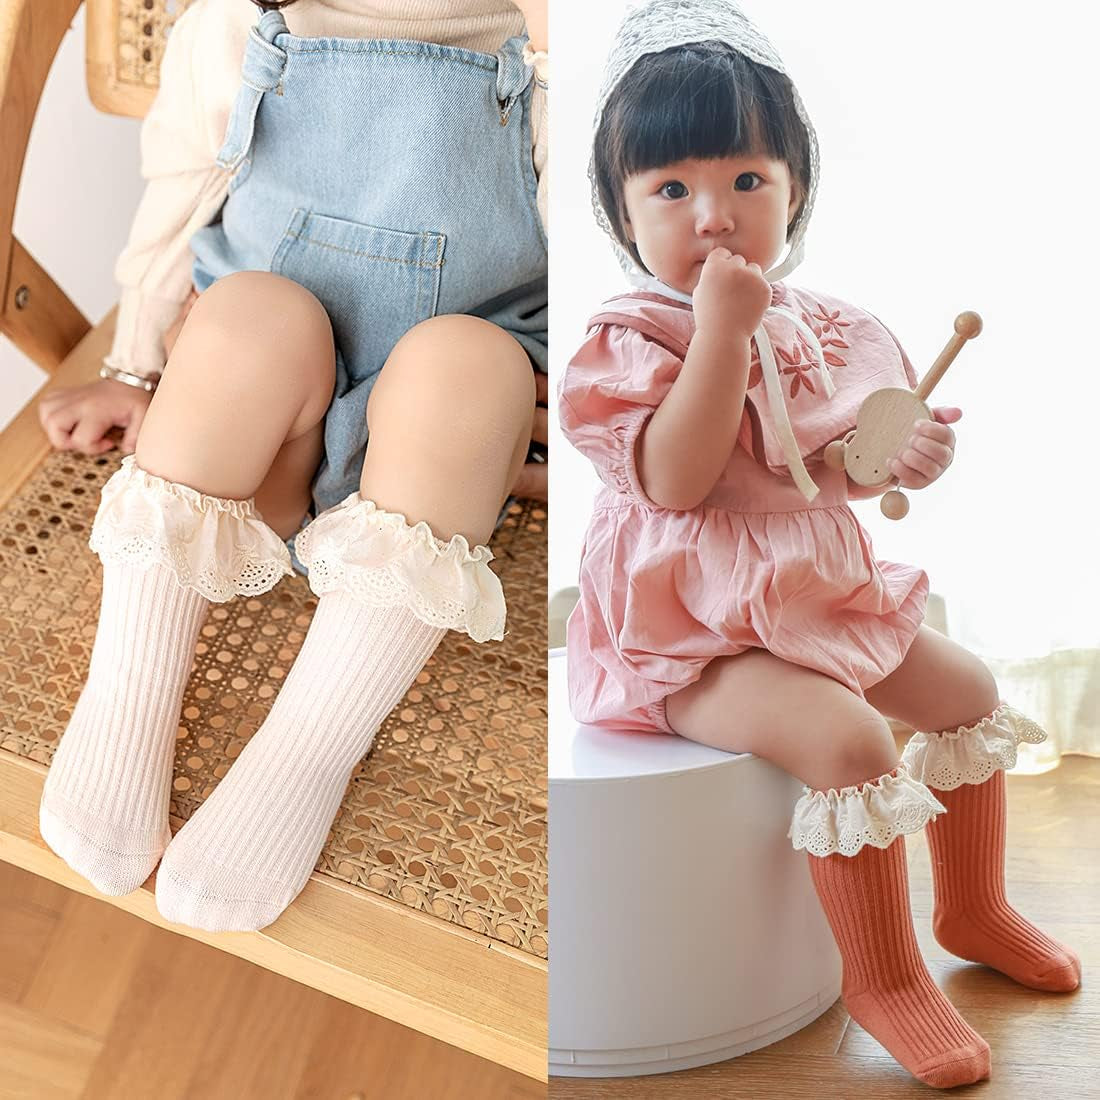 Baby Toddler Ruffle Lace Knee Girls Uniform Long Stockings Infants Cotton Cute Princess Frilly High Dress Socks